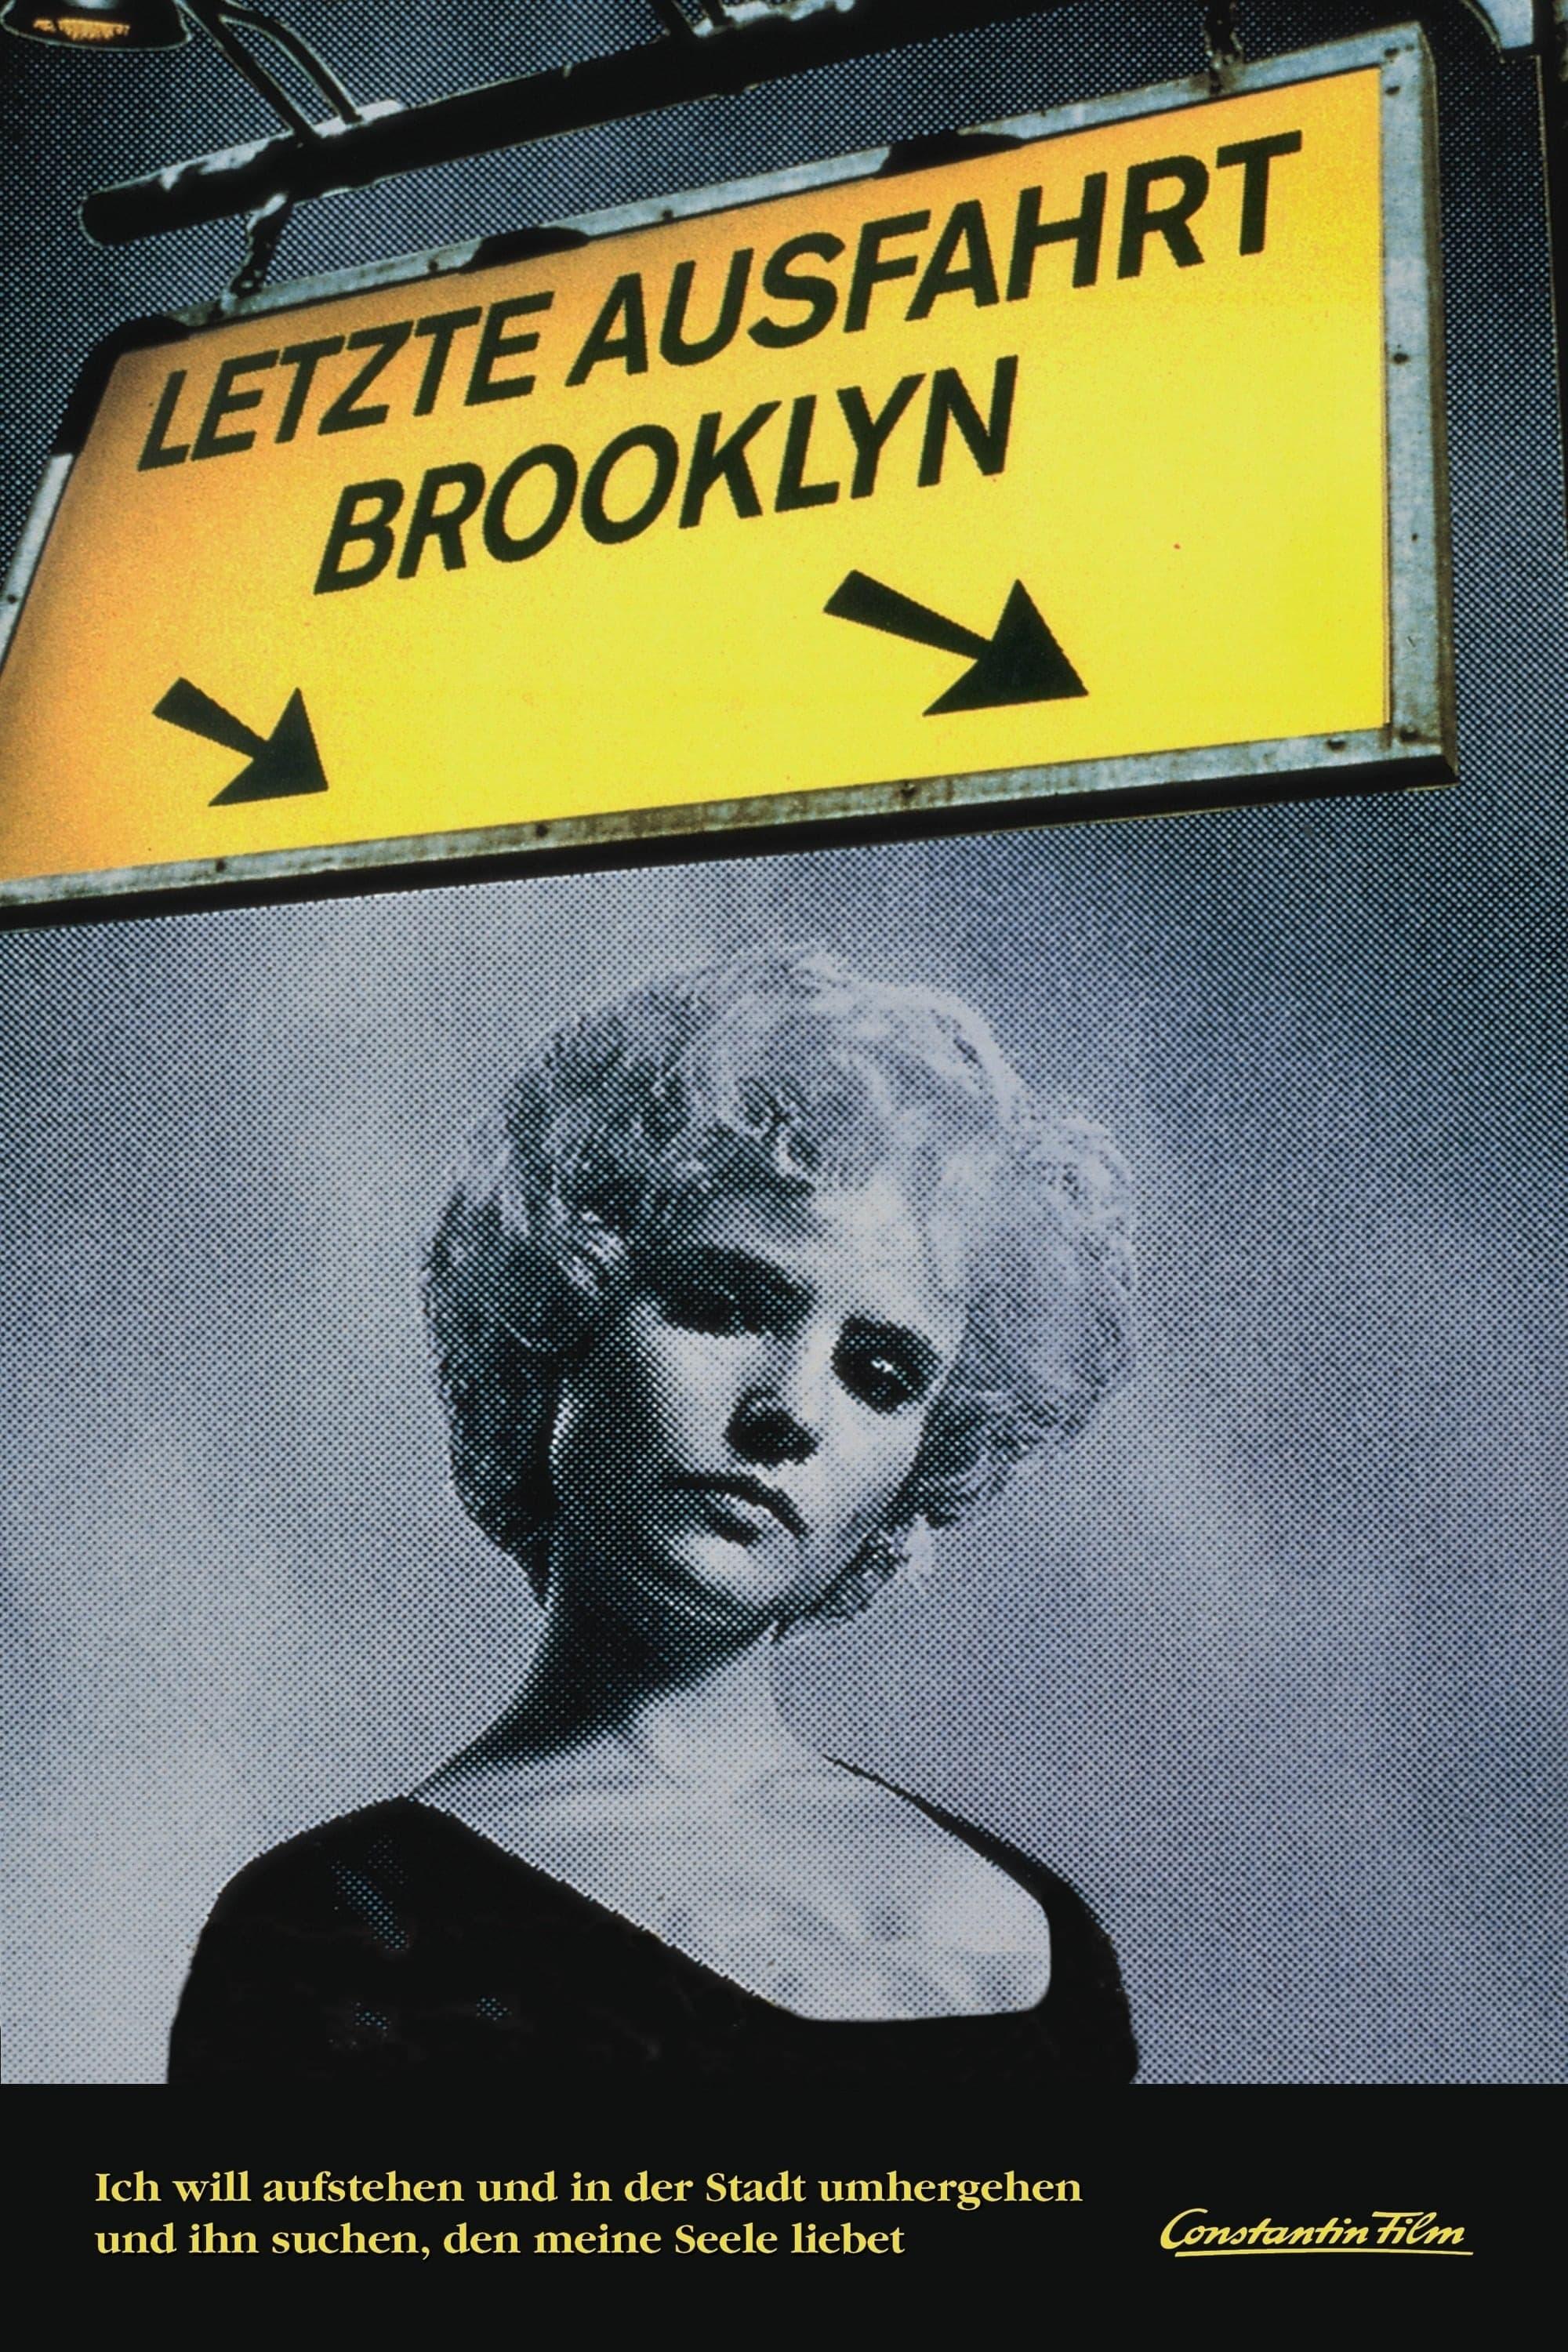 Letzte Ausfahrt Brooklyn poster